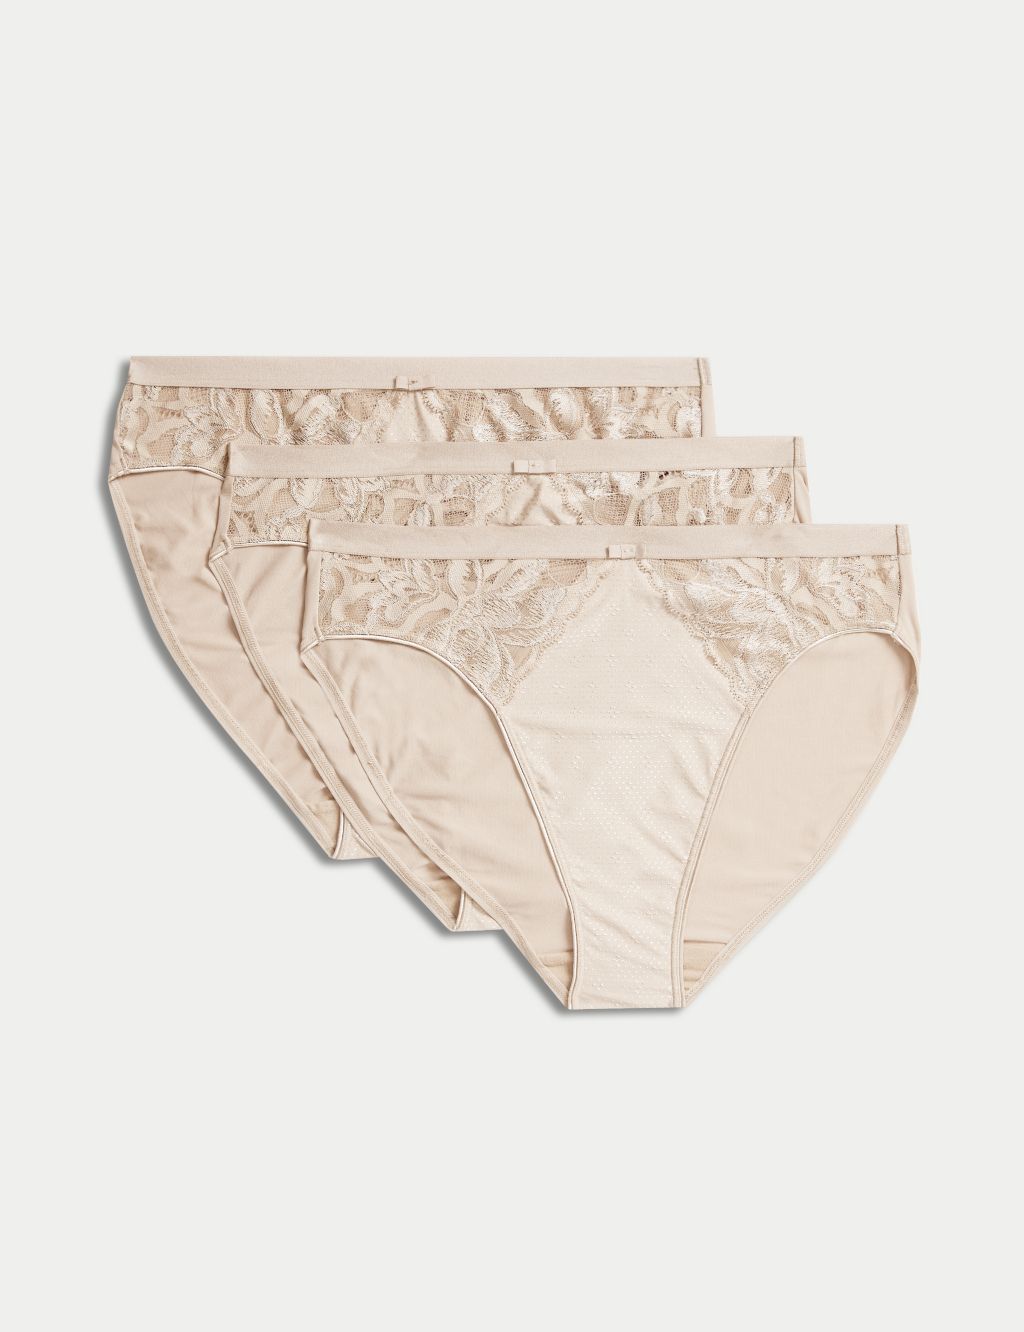 Laura Ashley - 5 Pack Set of Underwear (NWT | Size: XL)